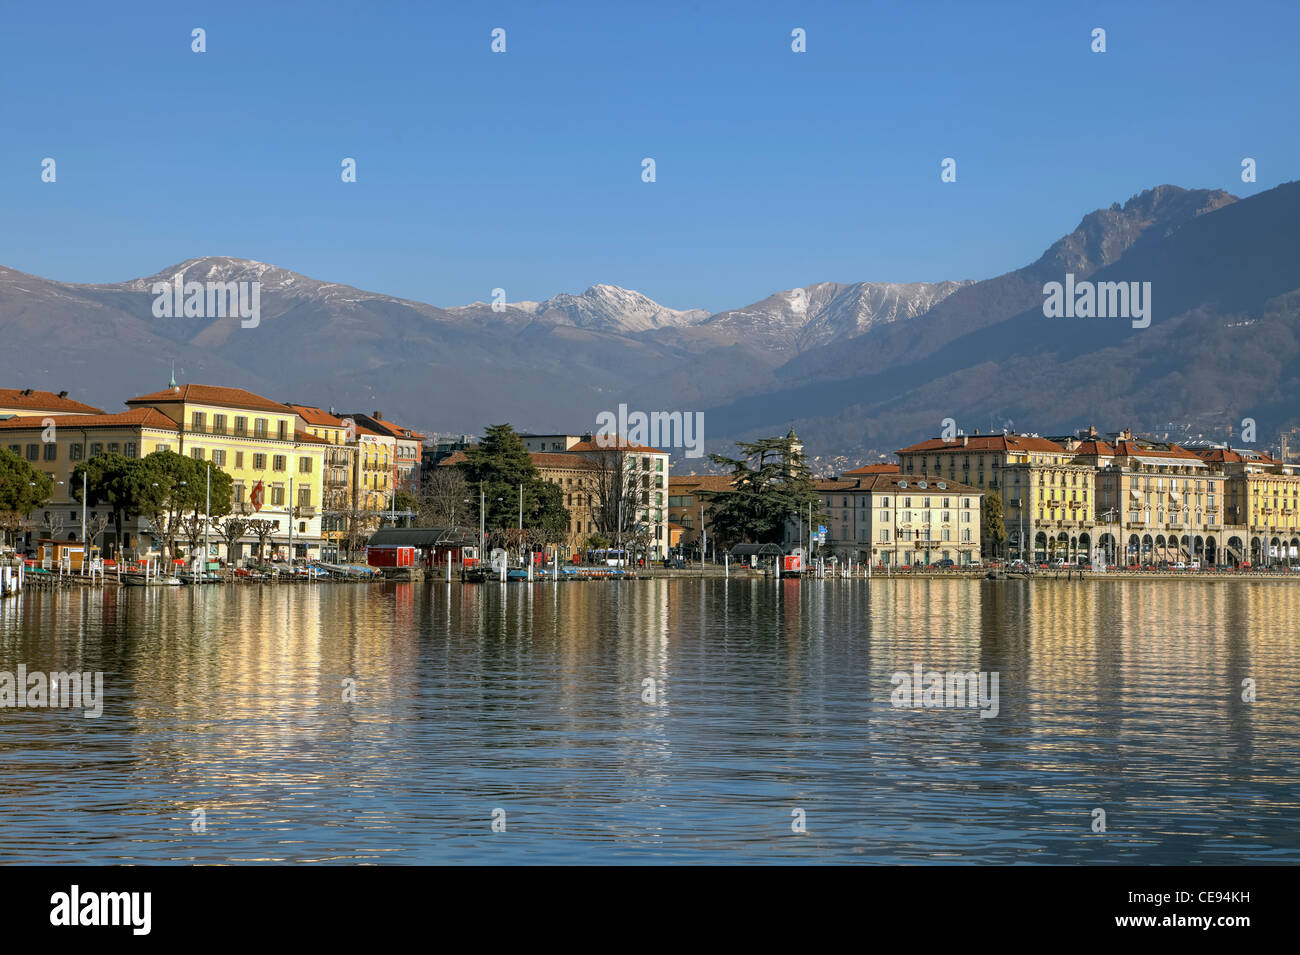 View of the city of Lugano, Ticino, Switzerland and the lakeside promenade of Lake Lugano. Stock Photo